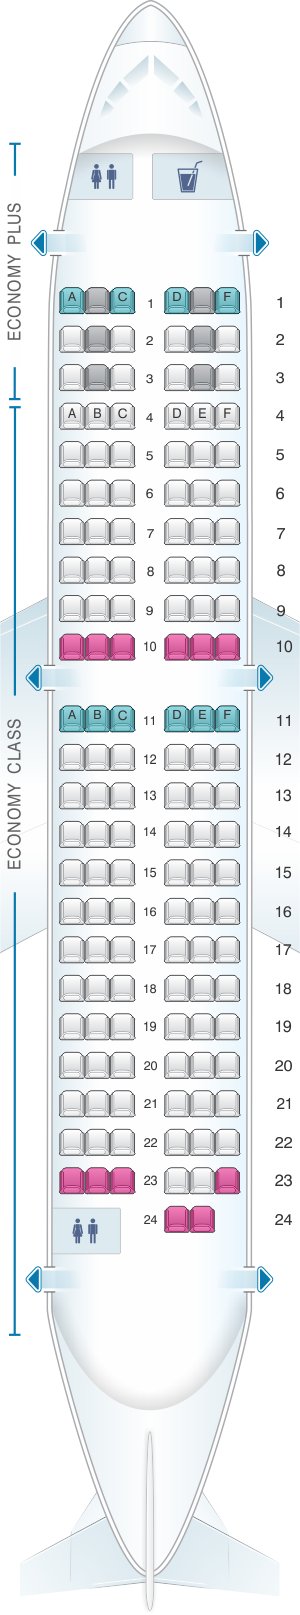 Seat map for WestJet Boeing B737 700